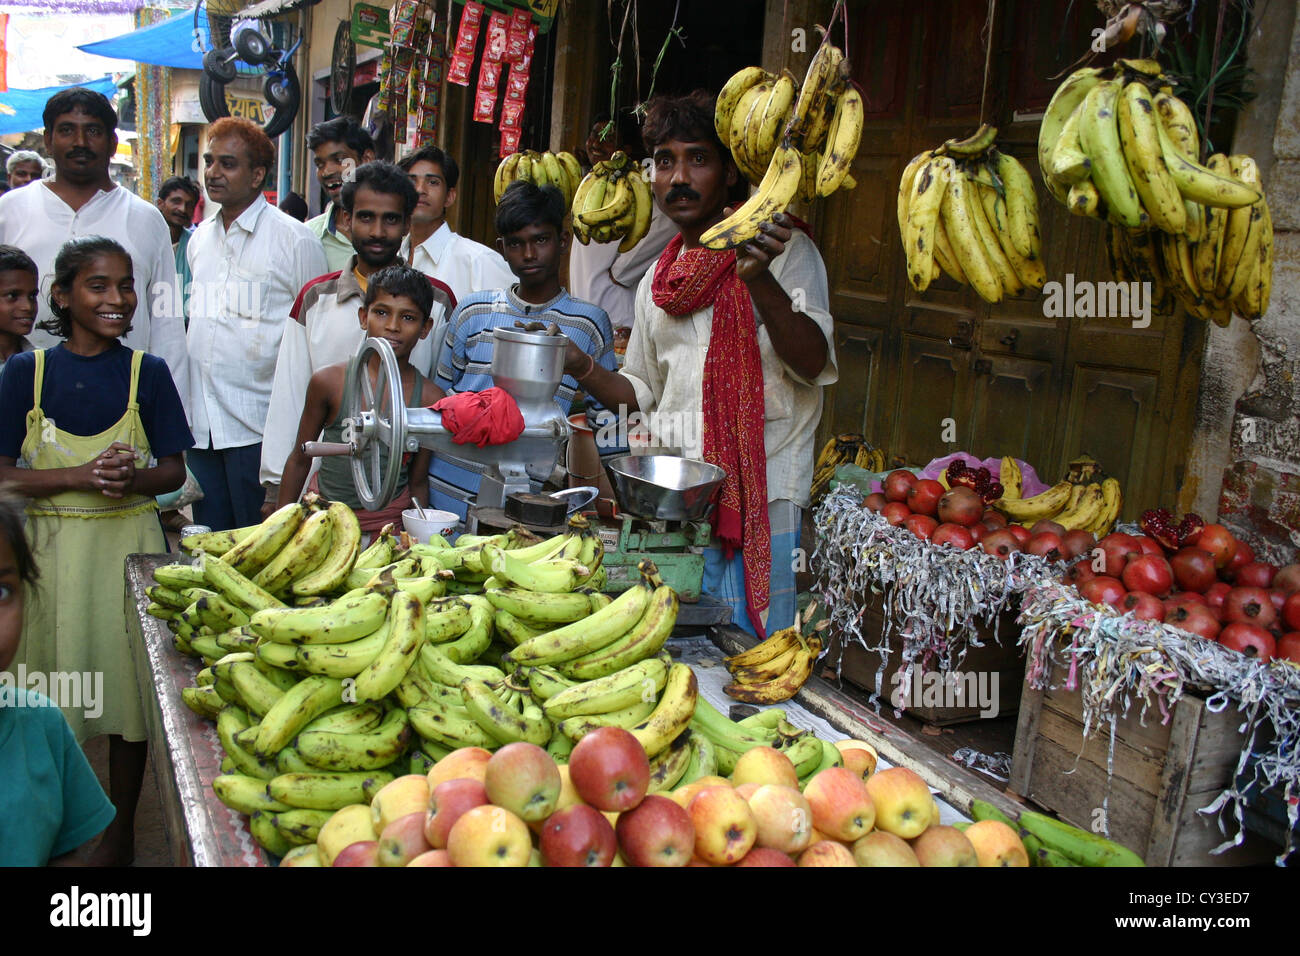 Banana sellers in a street market in New Delhi, India Stock Photo